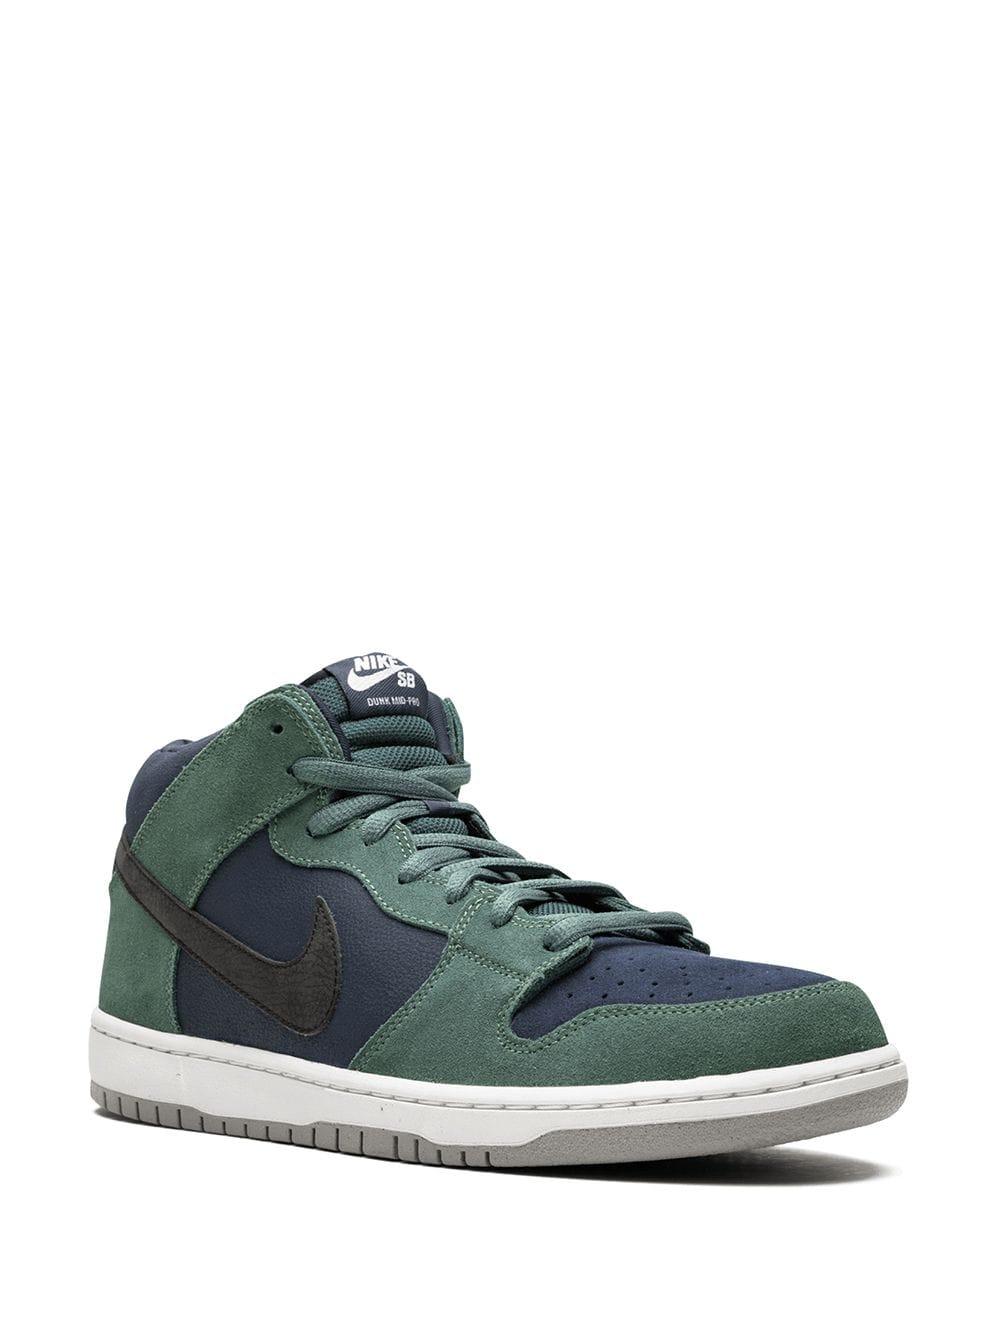 Nike Dunk Mid Pro Sb Sneakers in Green 